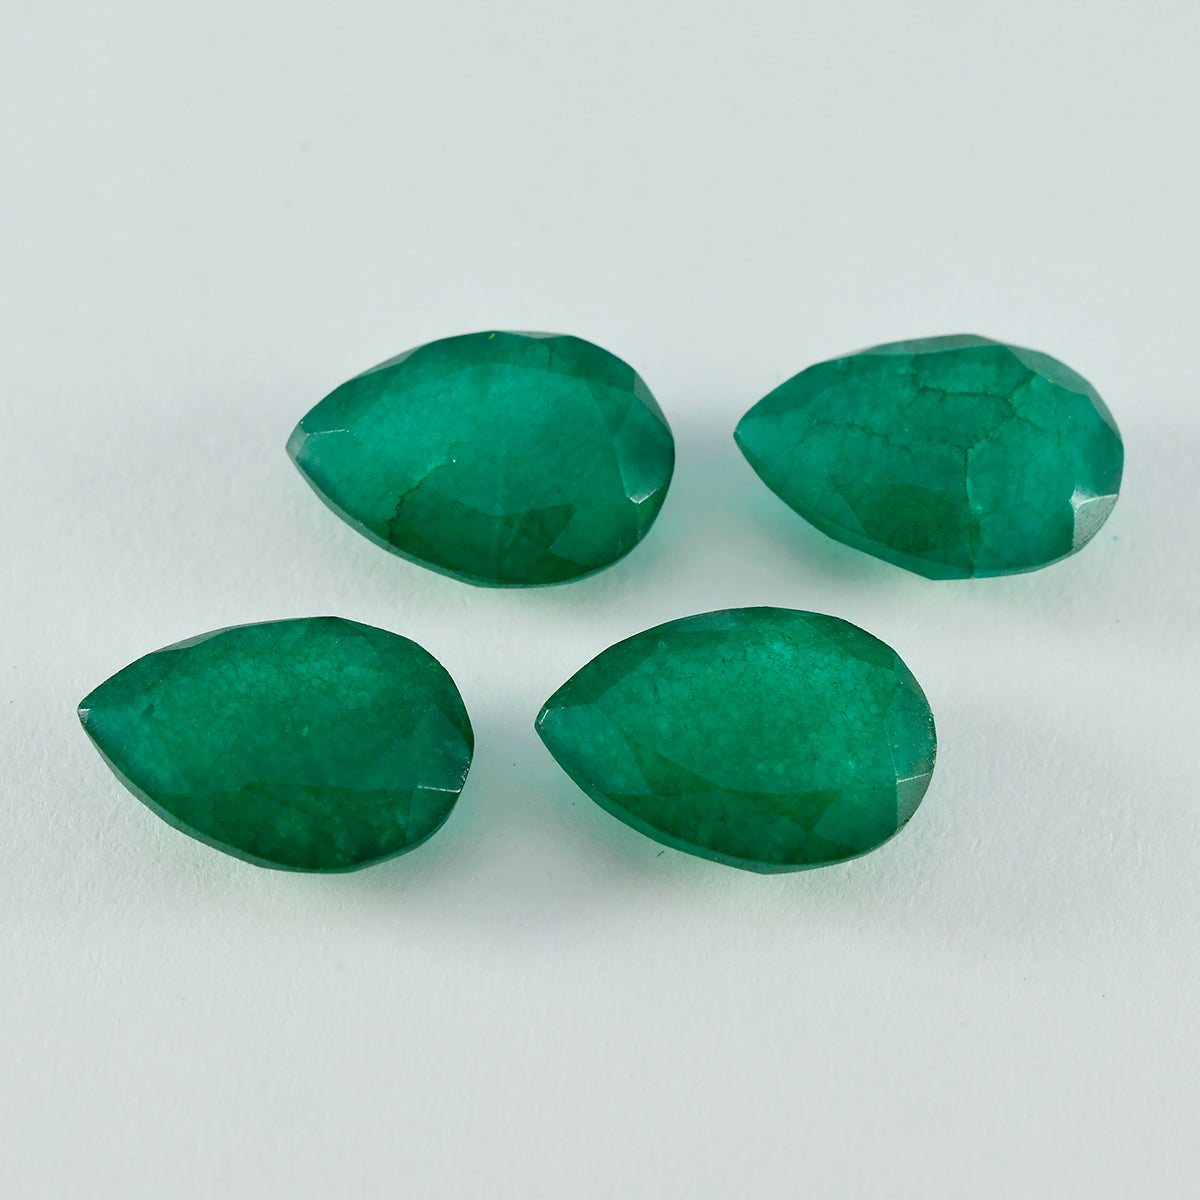 riyogems 1шт настоящая зеленая яшма граненая 9x13 мм грушевидная форма A+ качество россыпь драгоценных камней